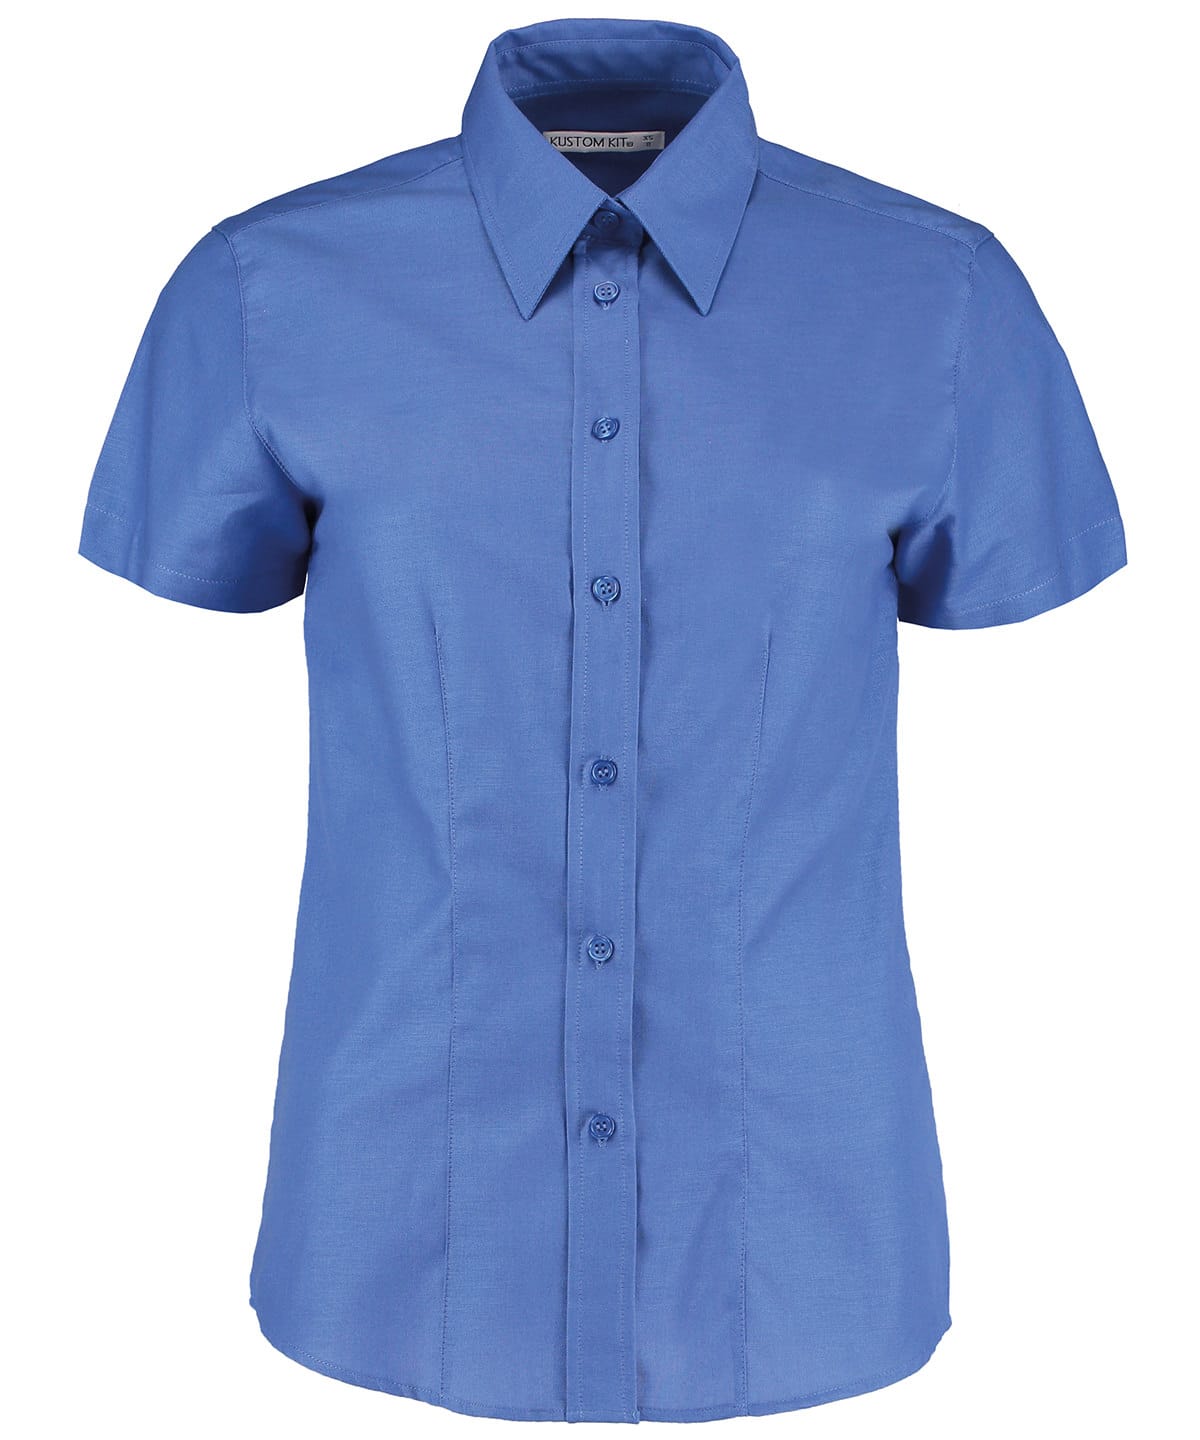 Kustom Kit Workplace Short-Sleeved Oxford Blouse – Ladies Fit